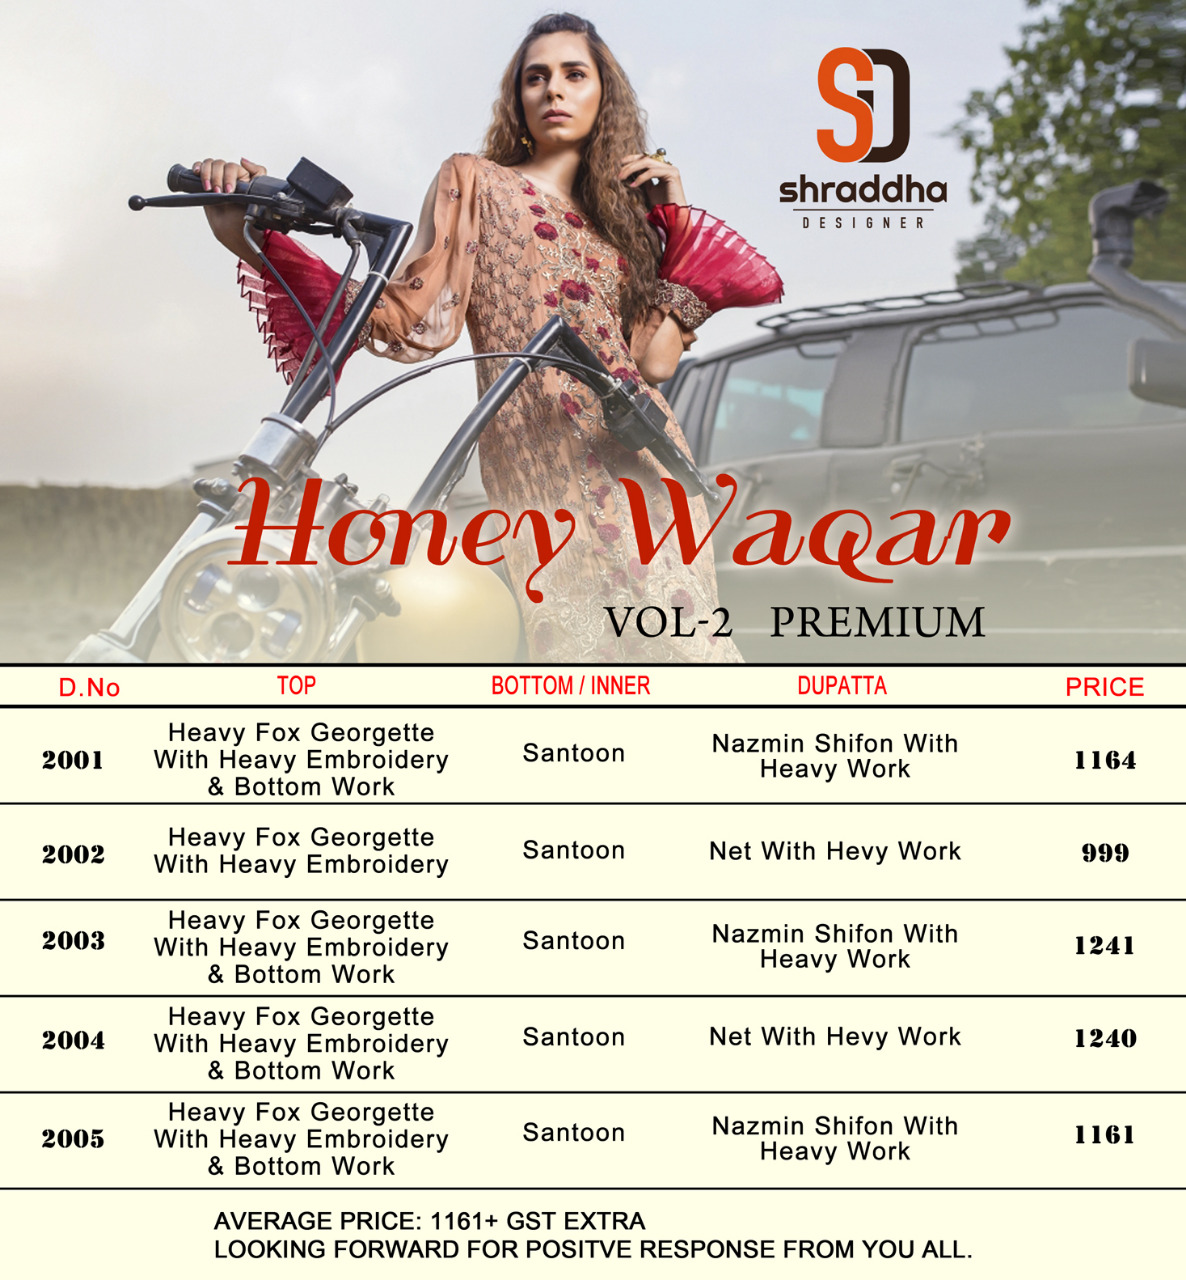 Shraddha designer presents honey waqar vol 2 premium fancy collection of salwar kameez